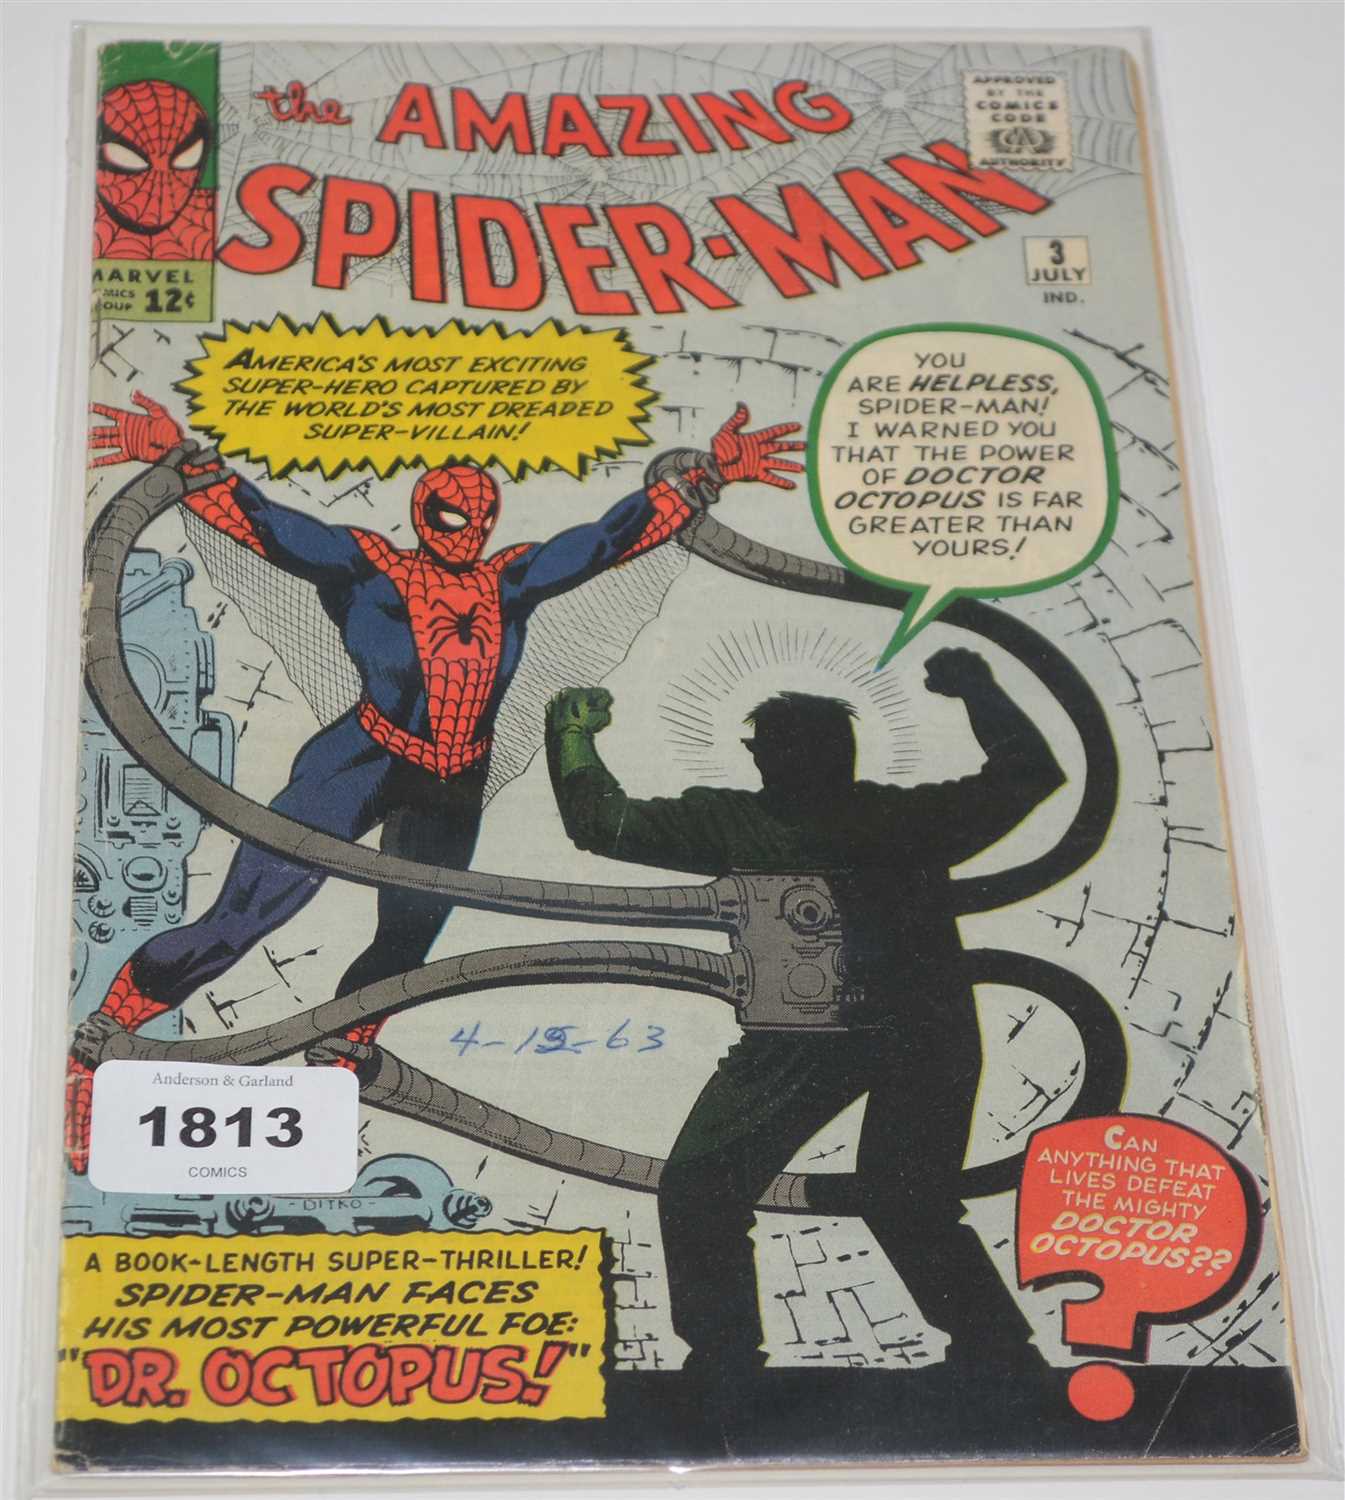 Lot 1813 - Amazing Spider-Man No. 3. comic.